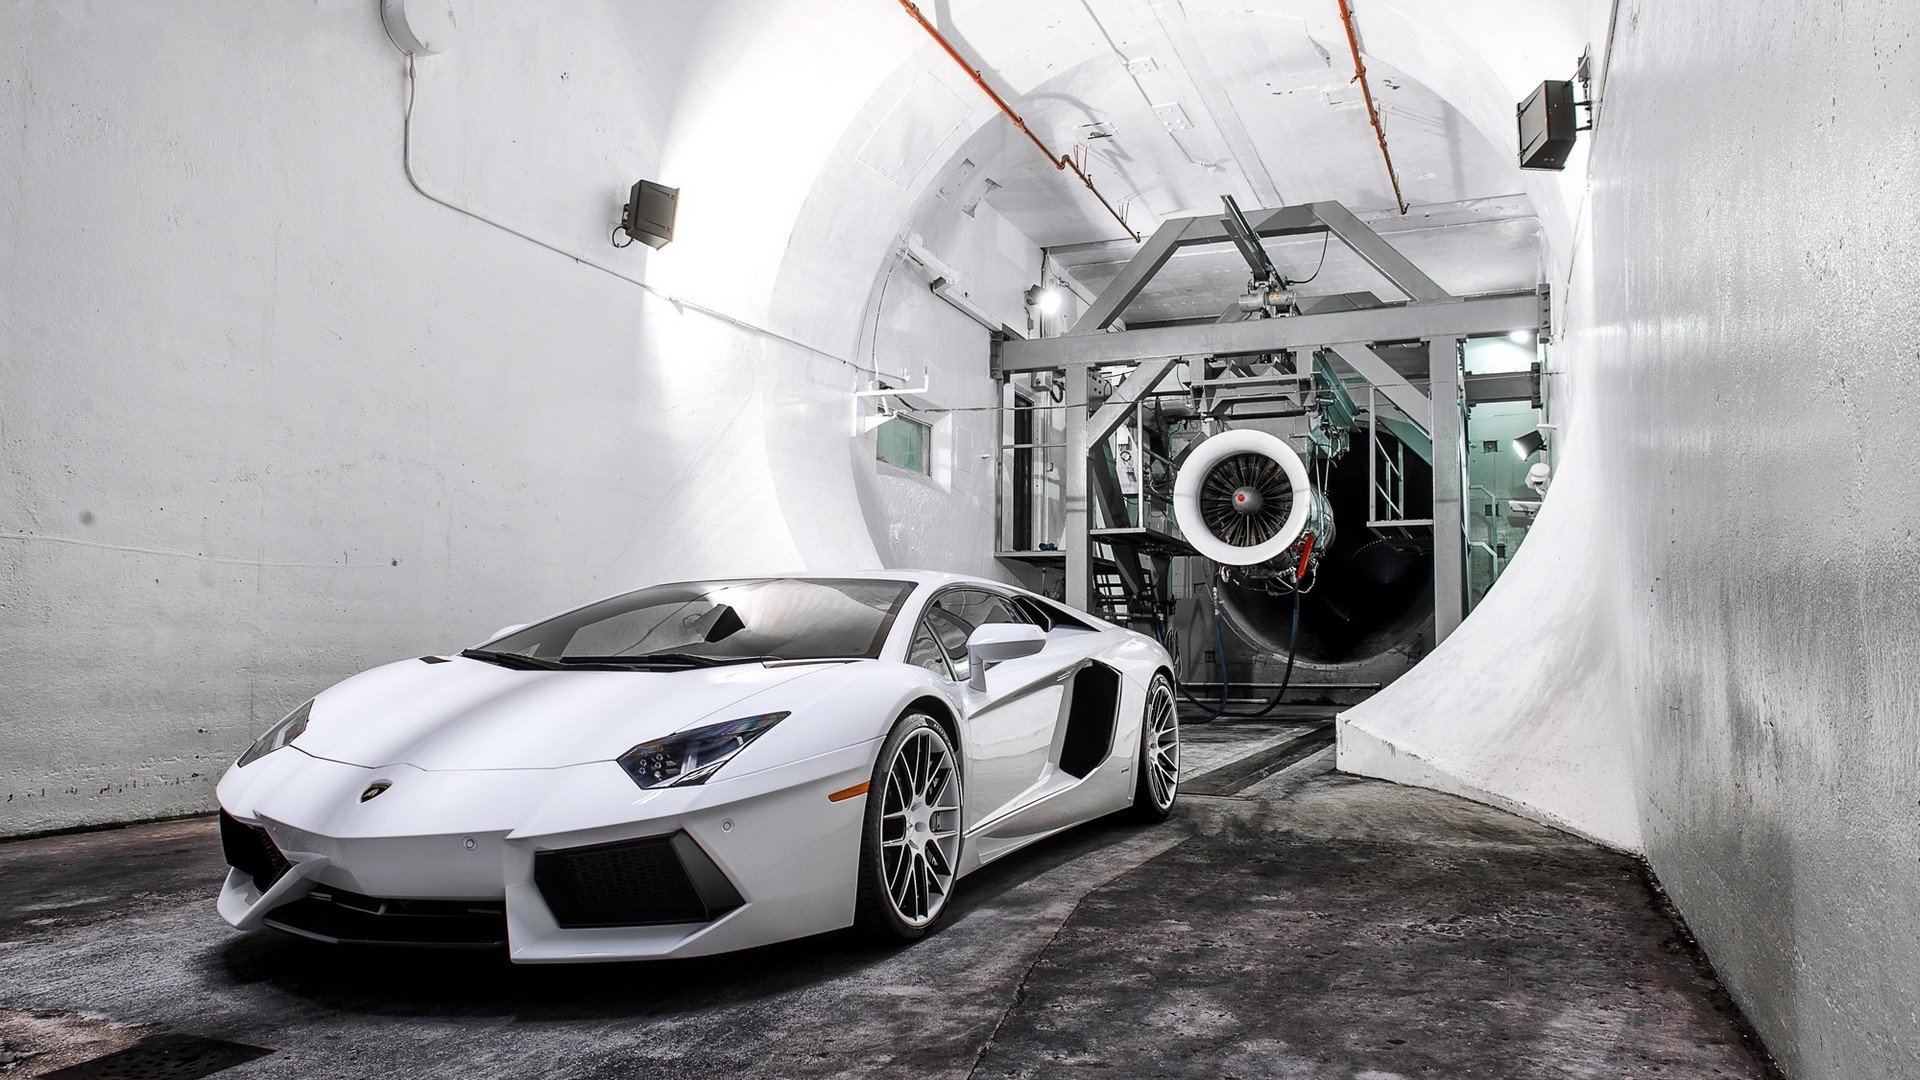 Best Lamborghini Aventador background ID:324110 for High Resolution full hd 1080p desktop